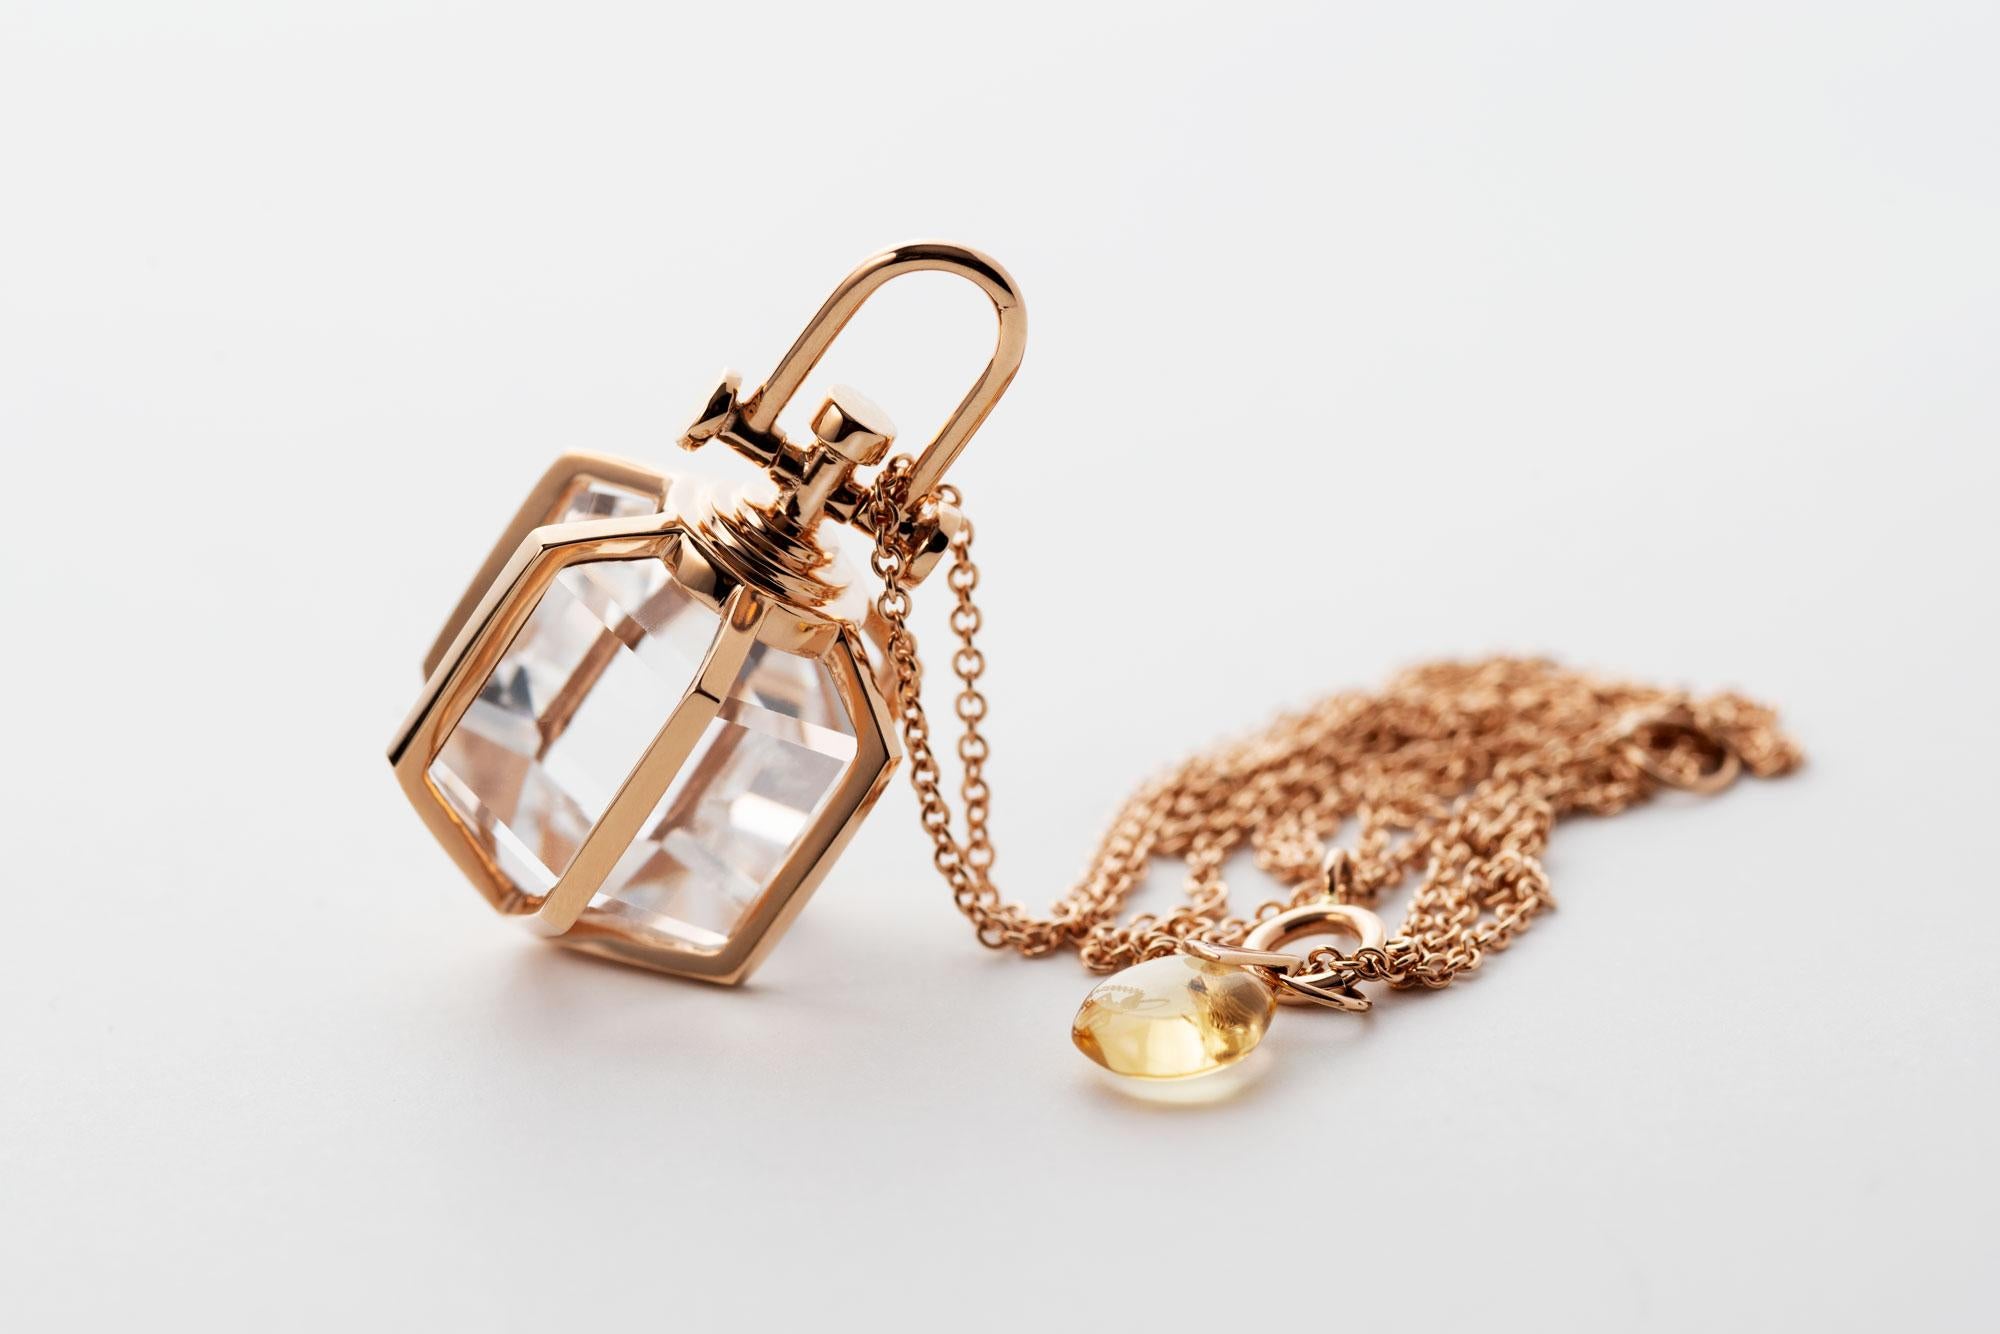 Retro Rebecca Li Six Senses Talisman Necklace, 18k Gold Large Natural Rock Crystal